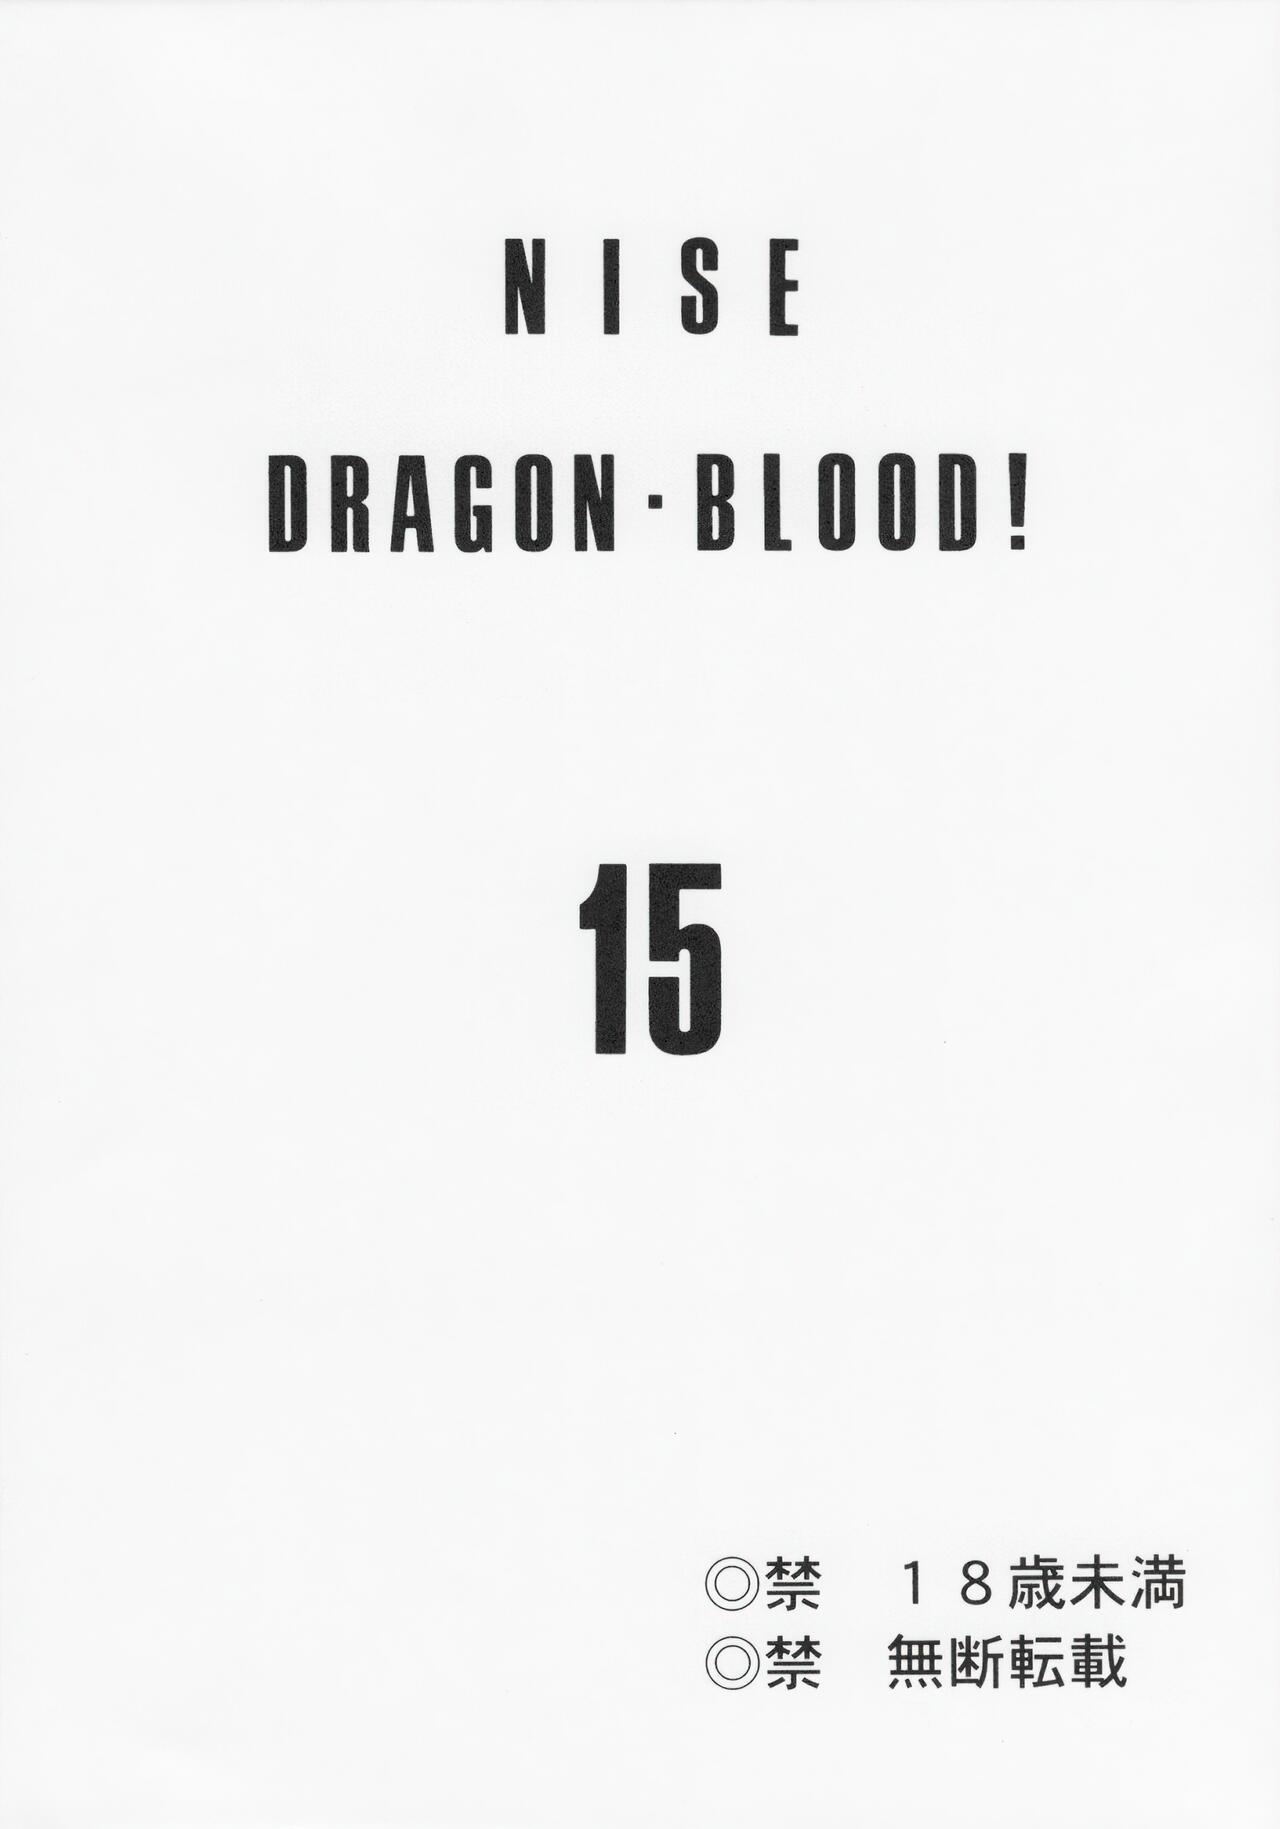 Nise DRAGON BLOOD! 15 2